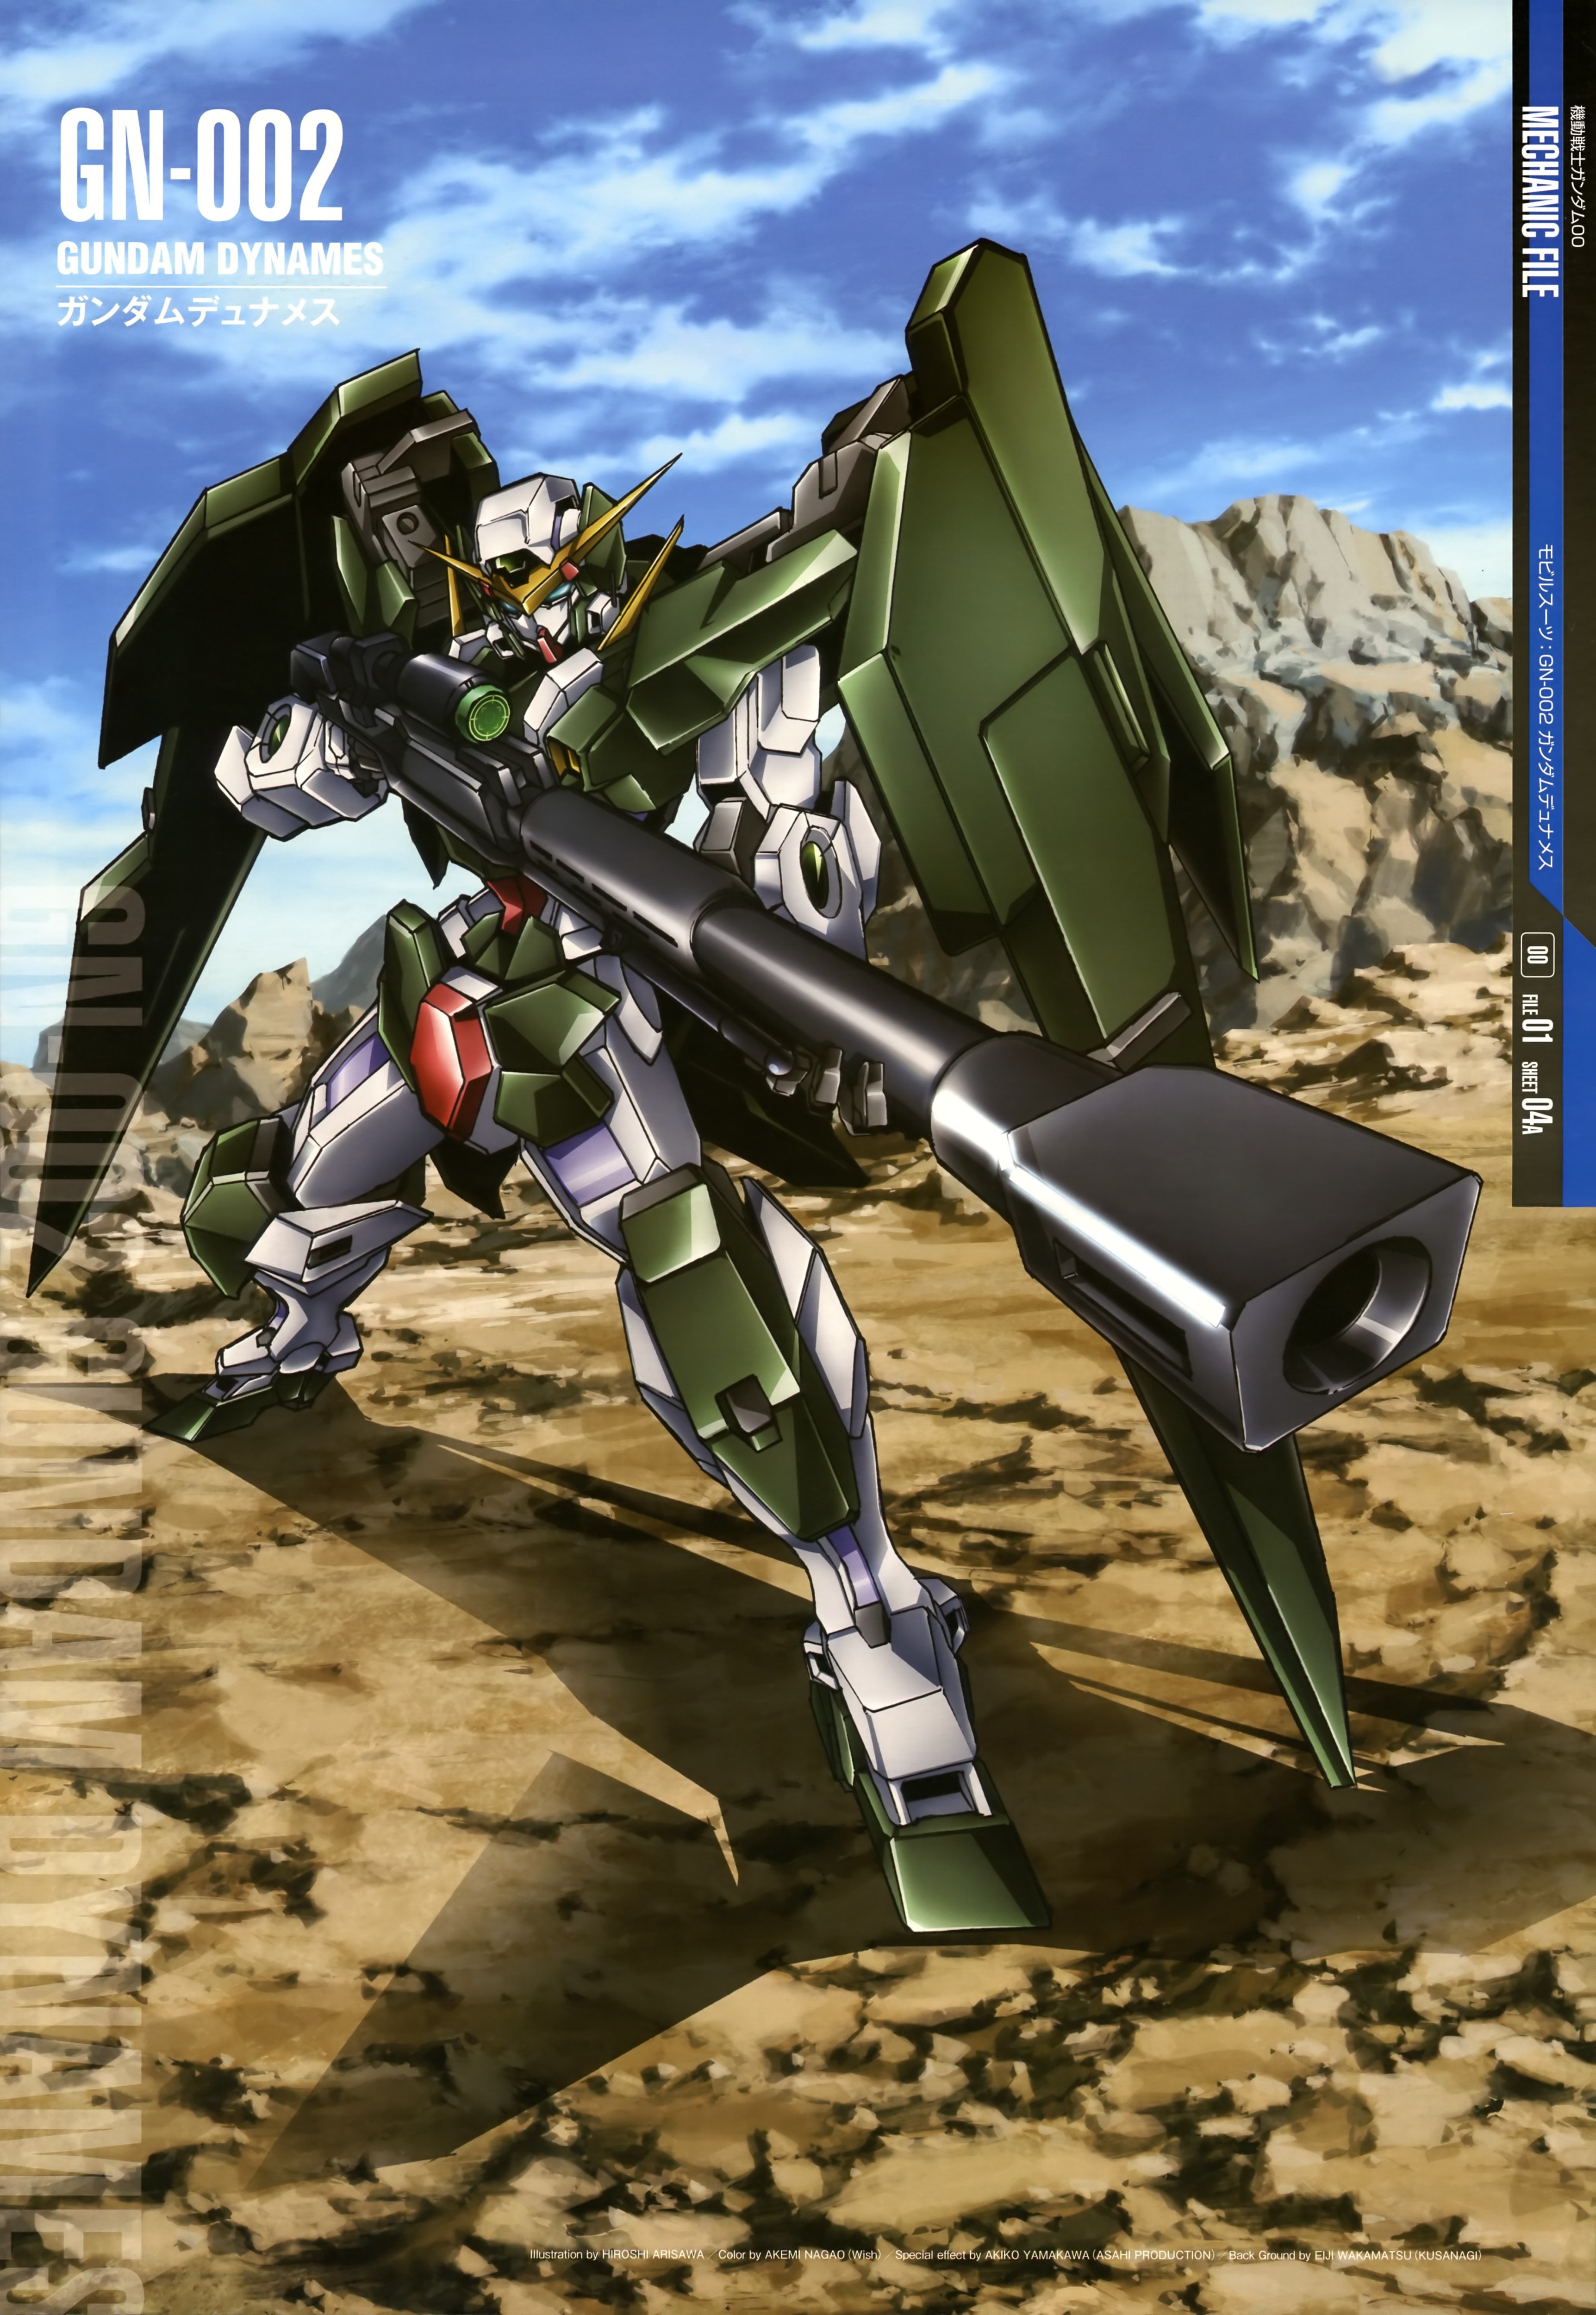 Anime 3448x5000 Gundam Dynames anime mechs Super Robot Taisen Mobile Suit Gundam 00 Gundam artwork digital art